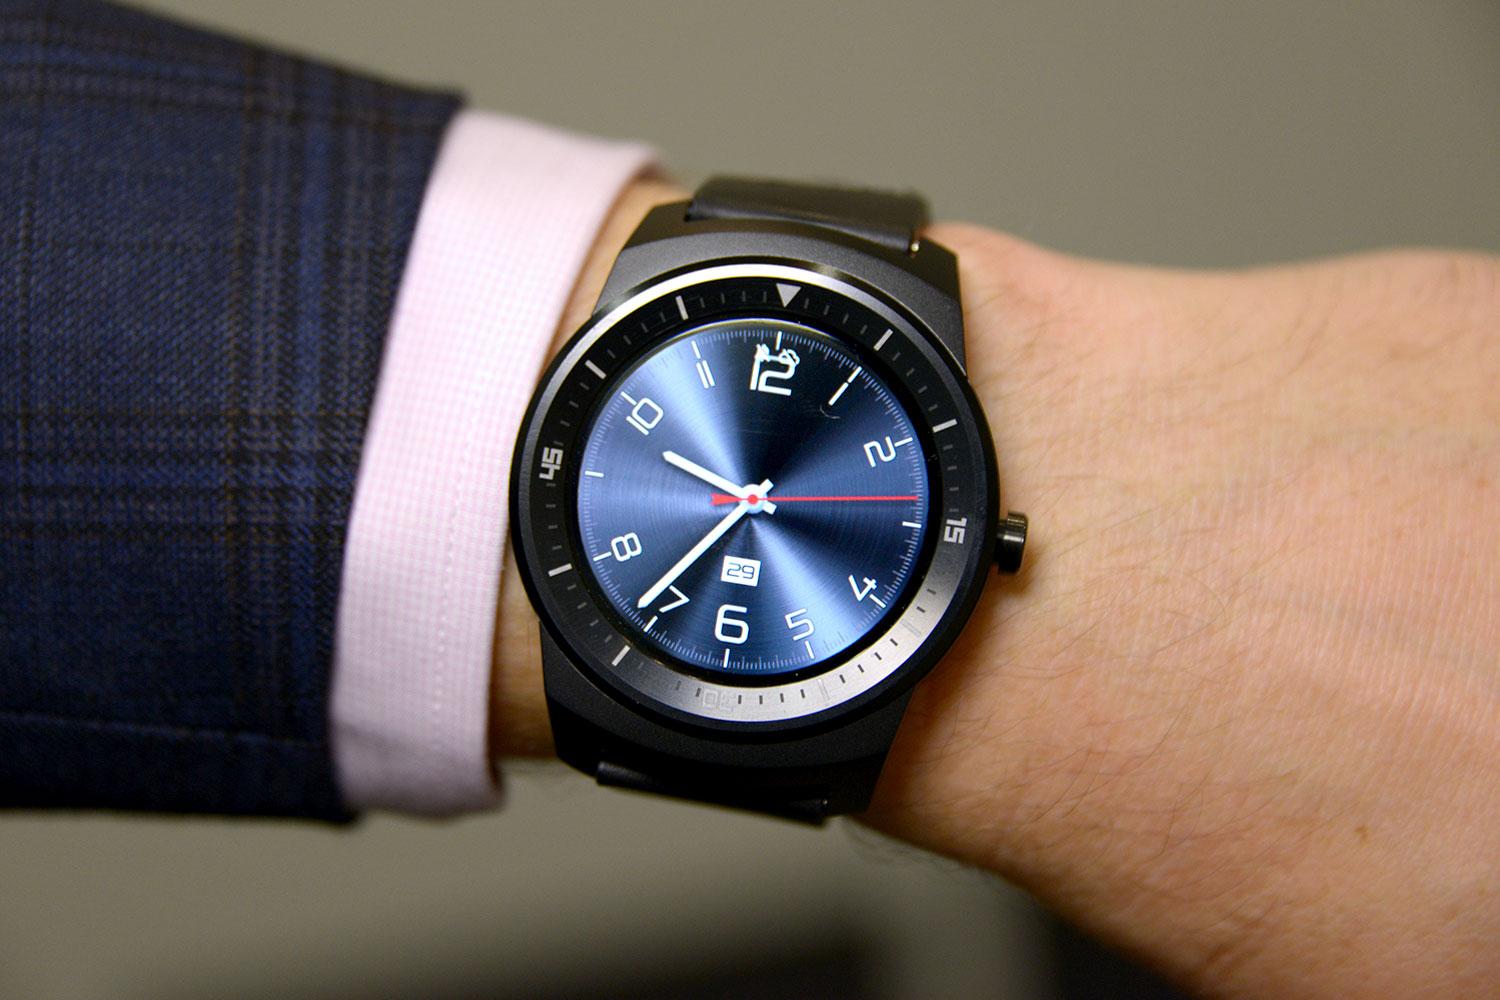 LG-G-watch-R-1.jpg